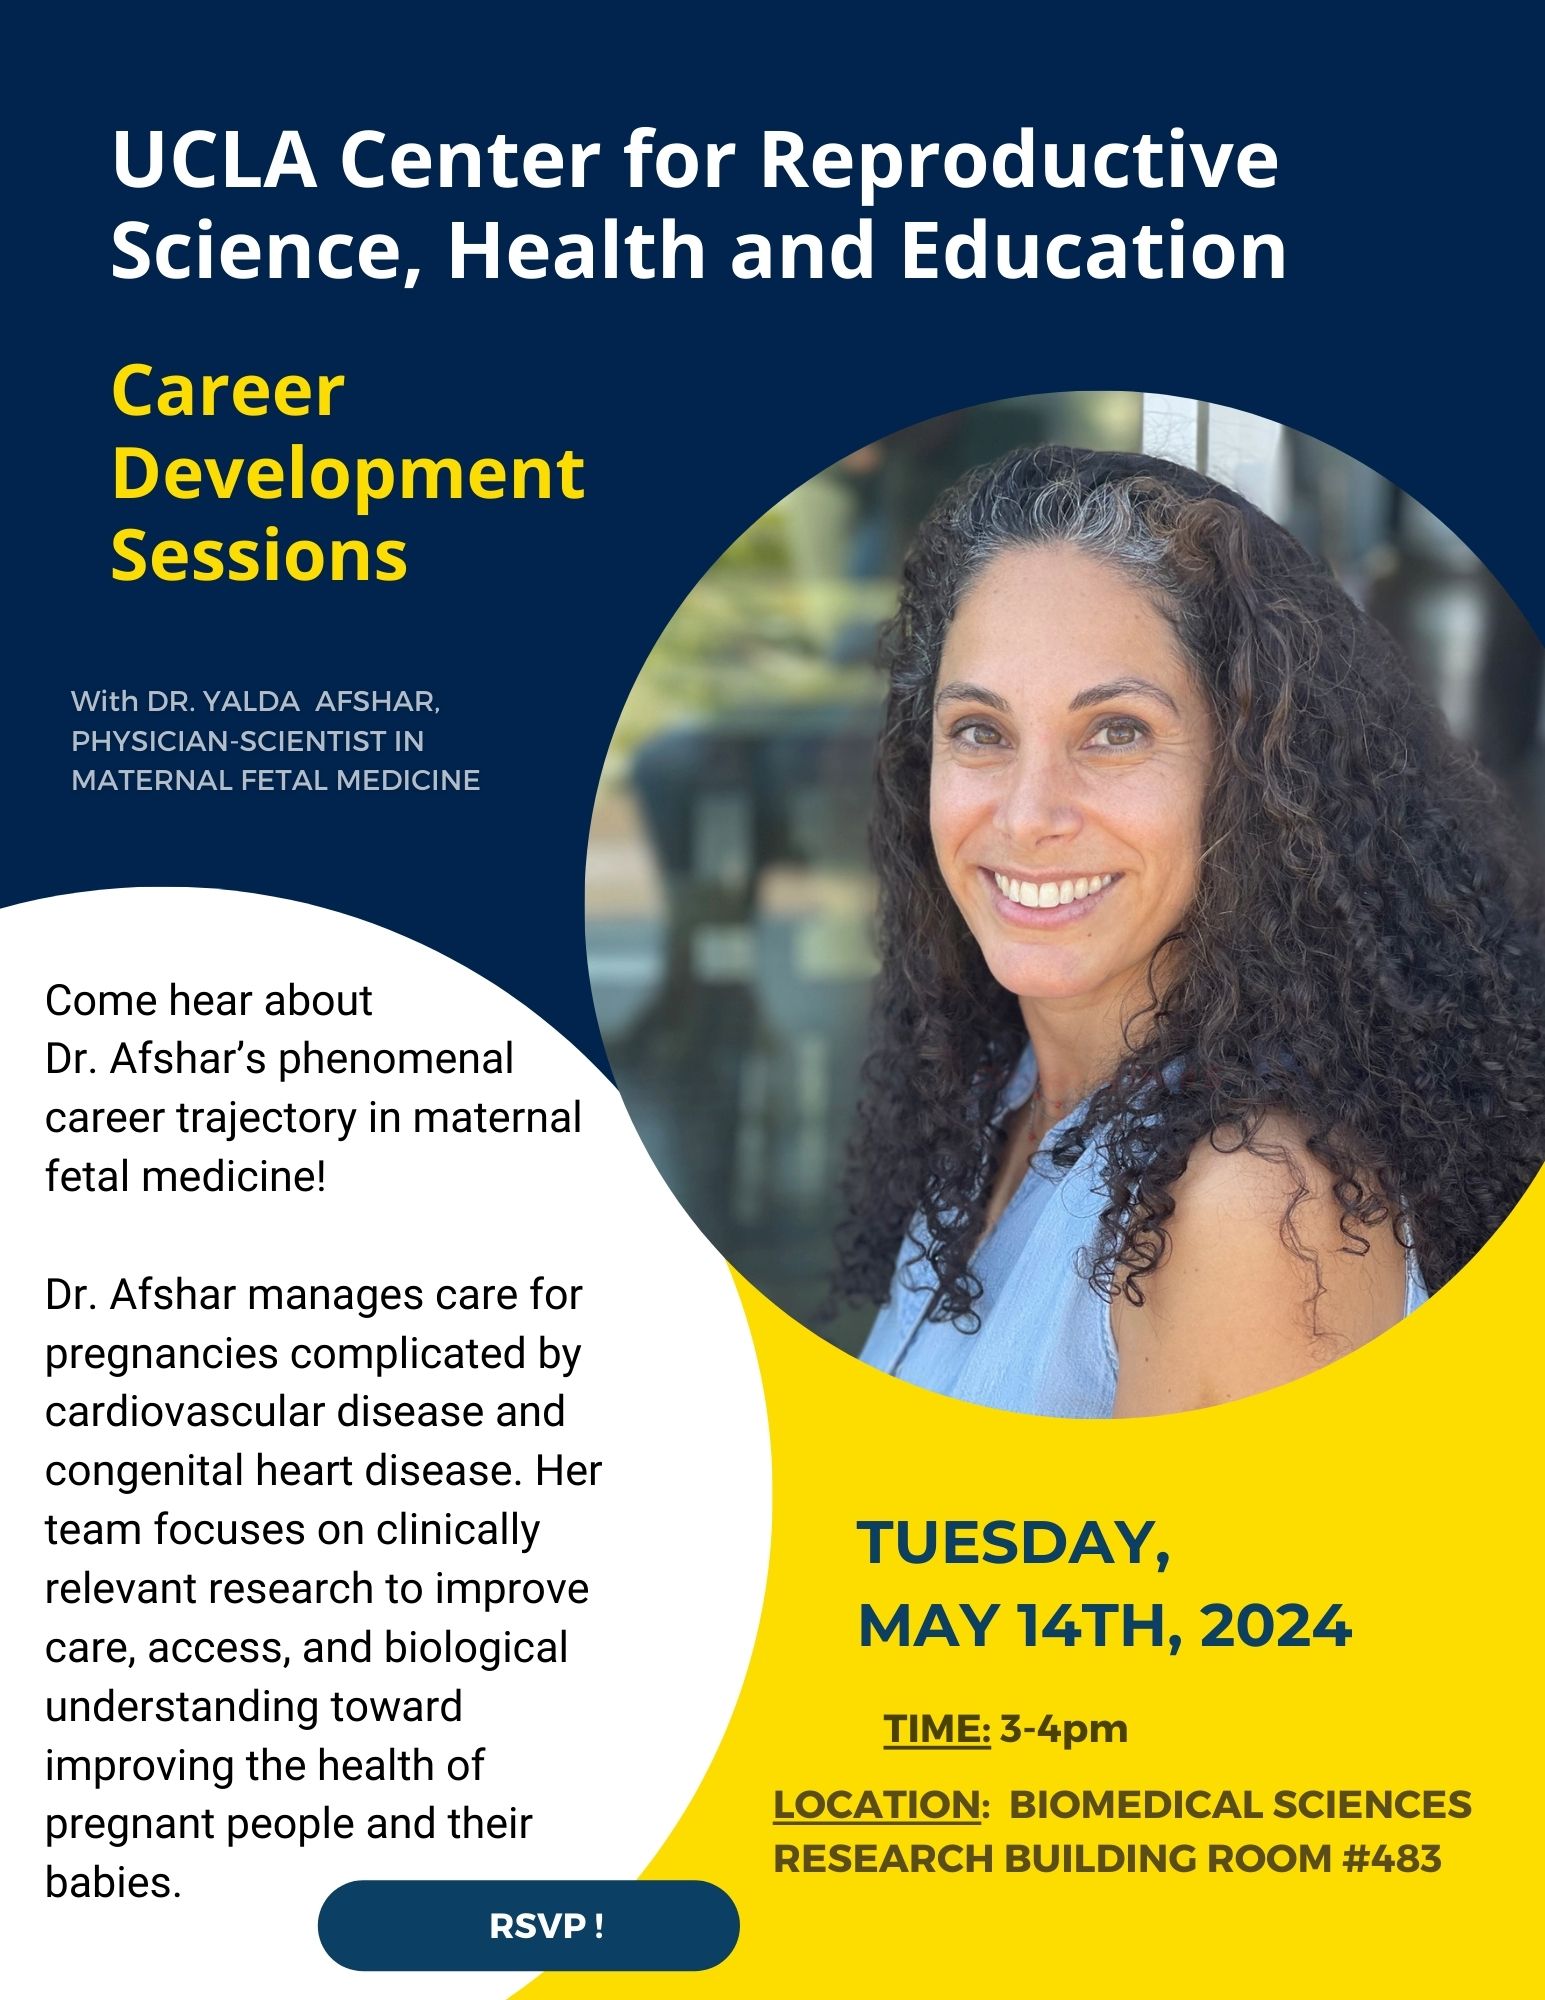 5/14/24 – Career Development Sessions With Dr. Yalda Afshar, Physician-Scientist in Maternal Fetal Medicine